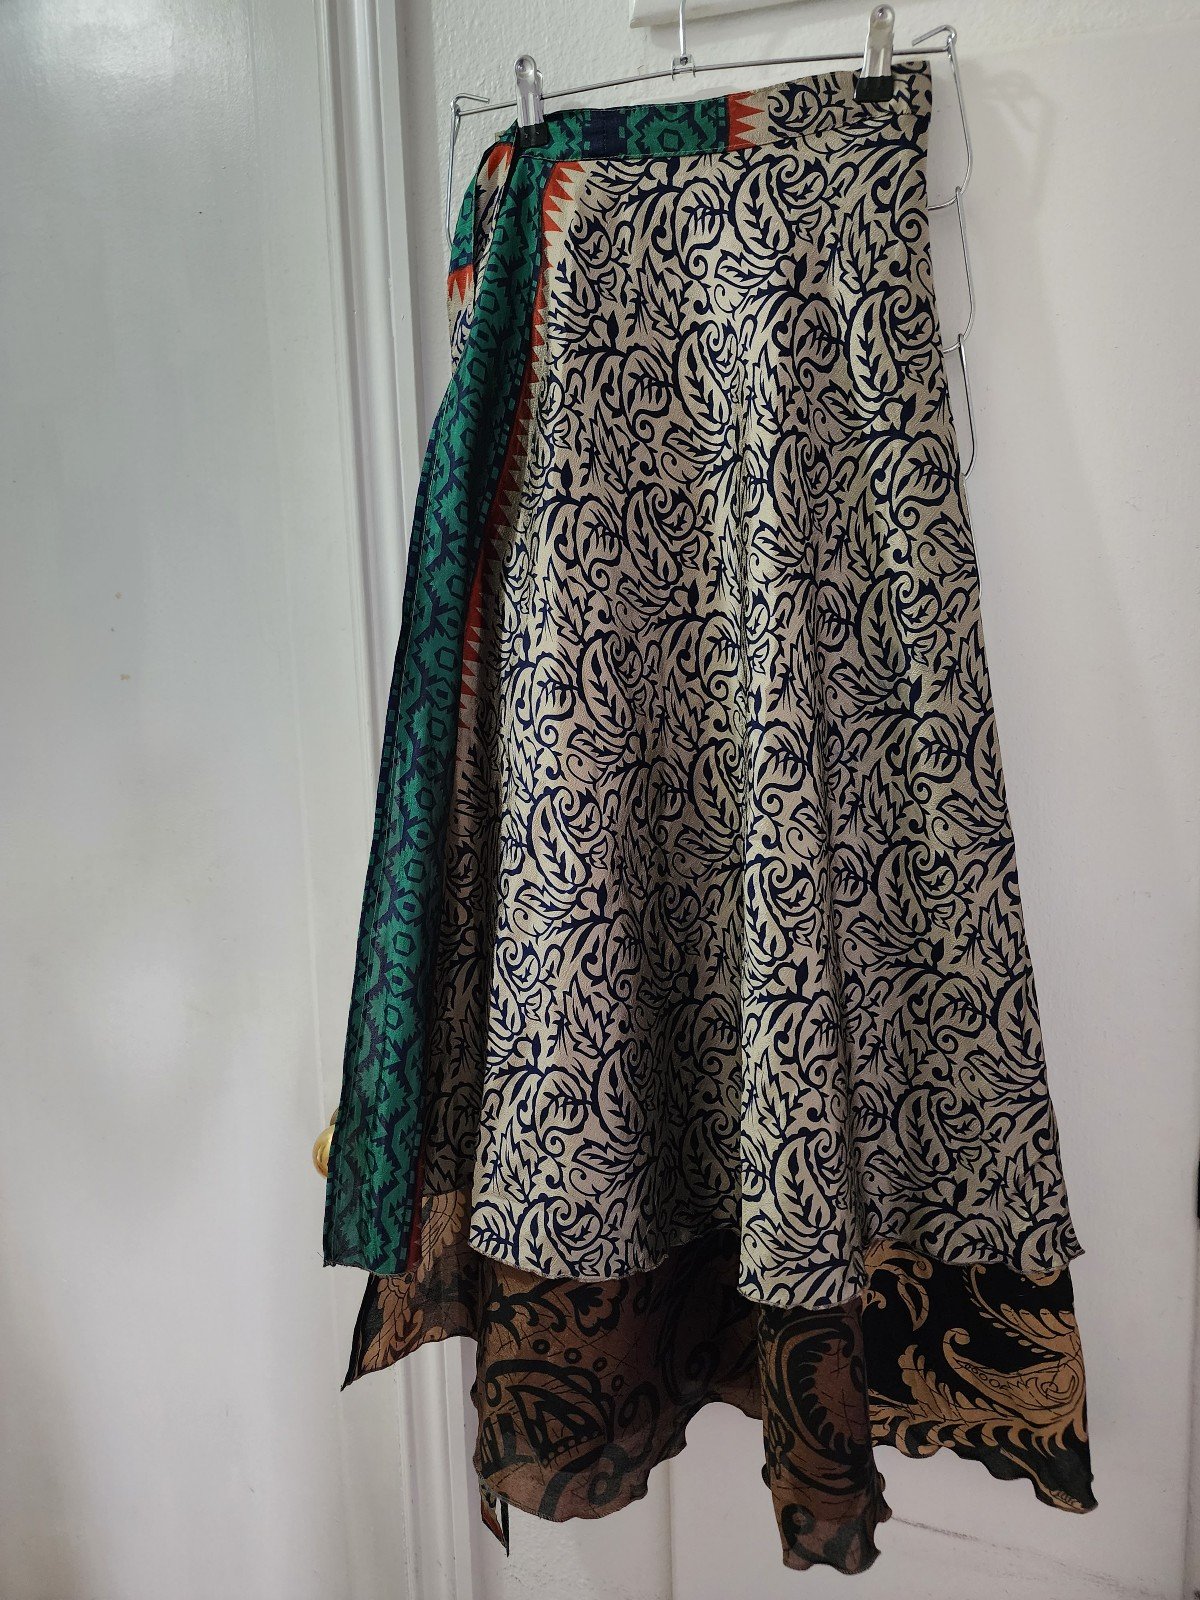 The Best Seller Recycled Sari Wrap Skirt JIUMB8zU3 best